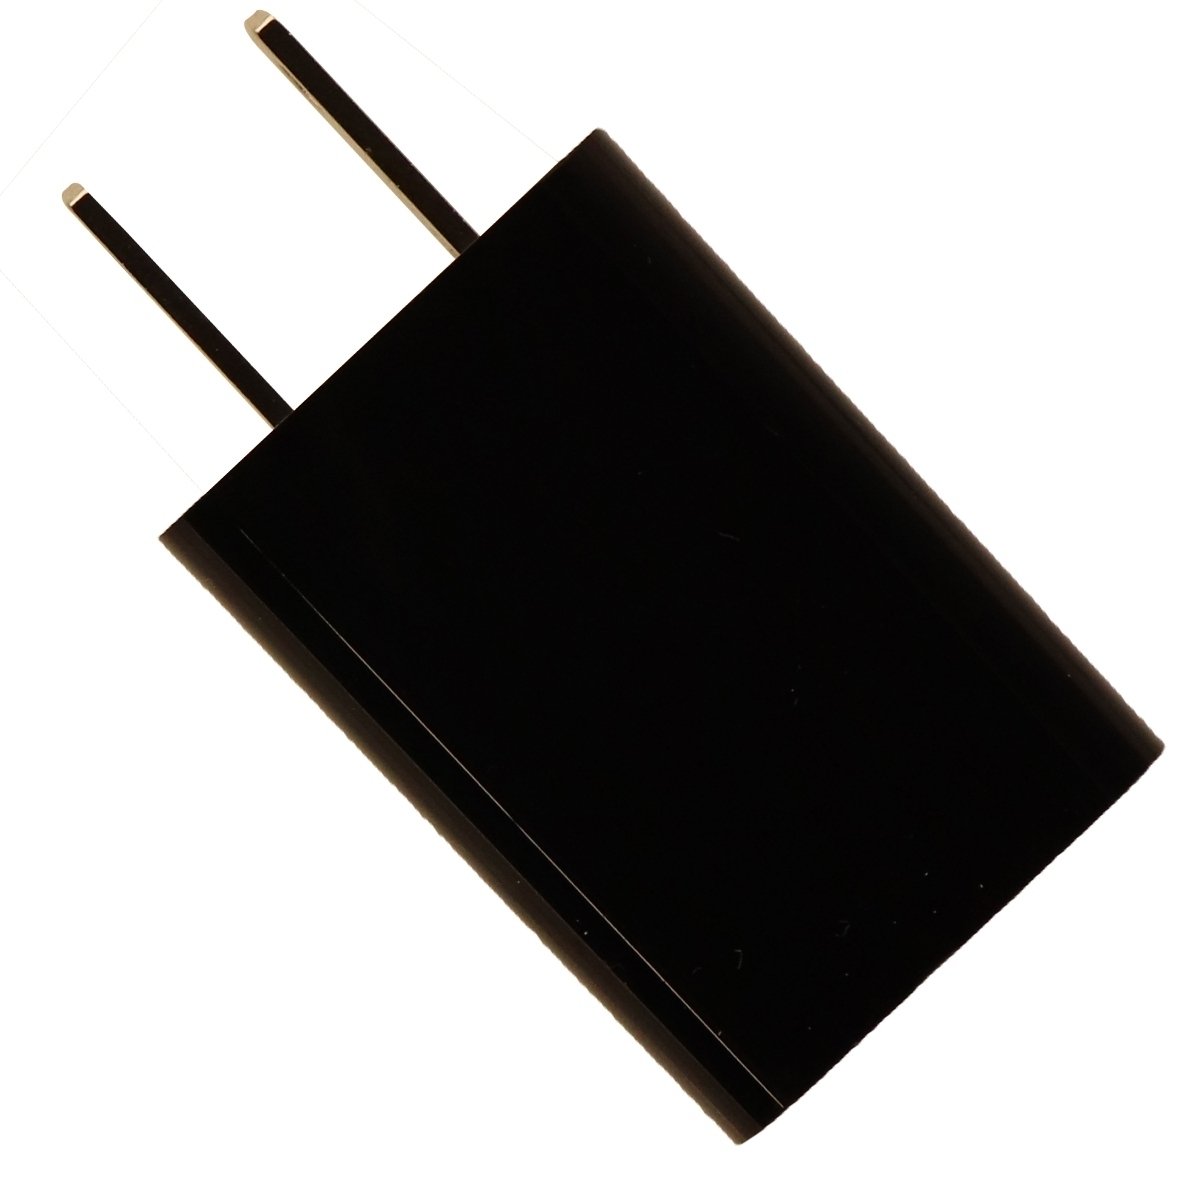 Doro (5V/1A) Single USB Wall Charger Power Adapter - Black (A8-501000)